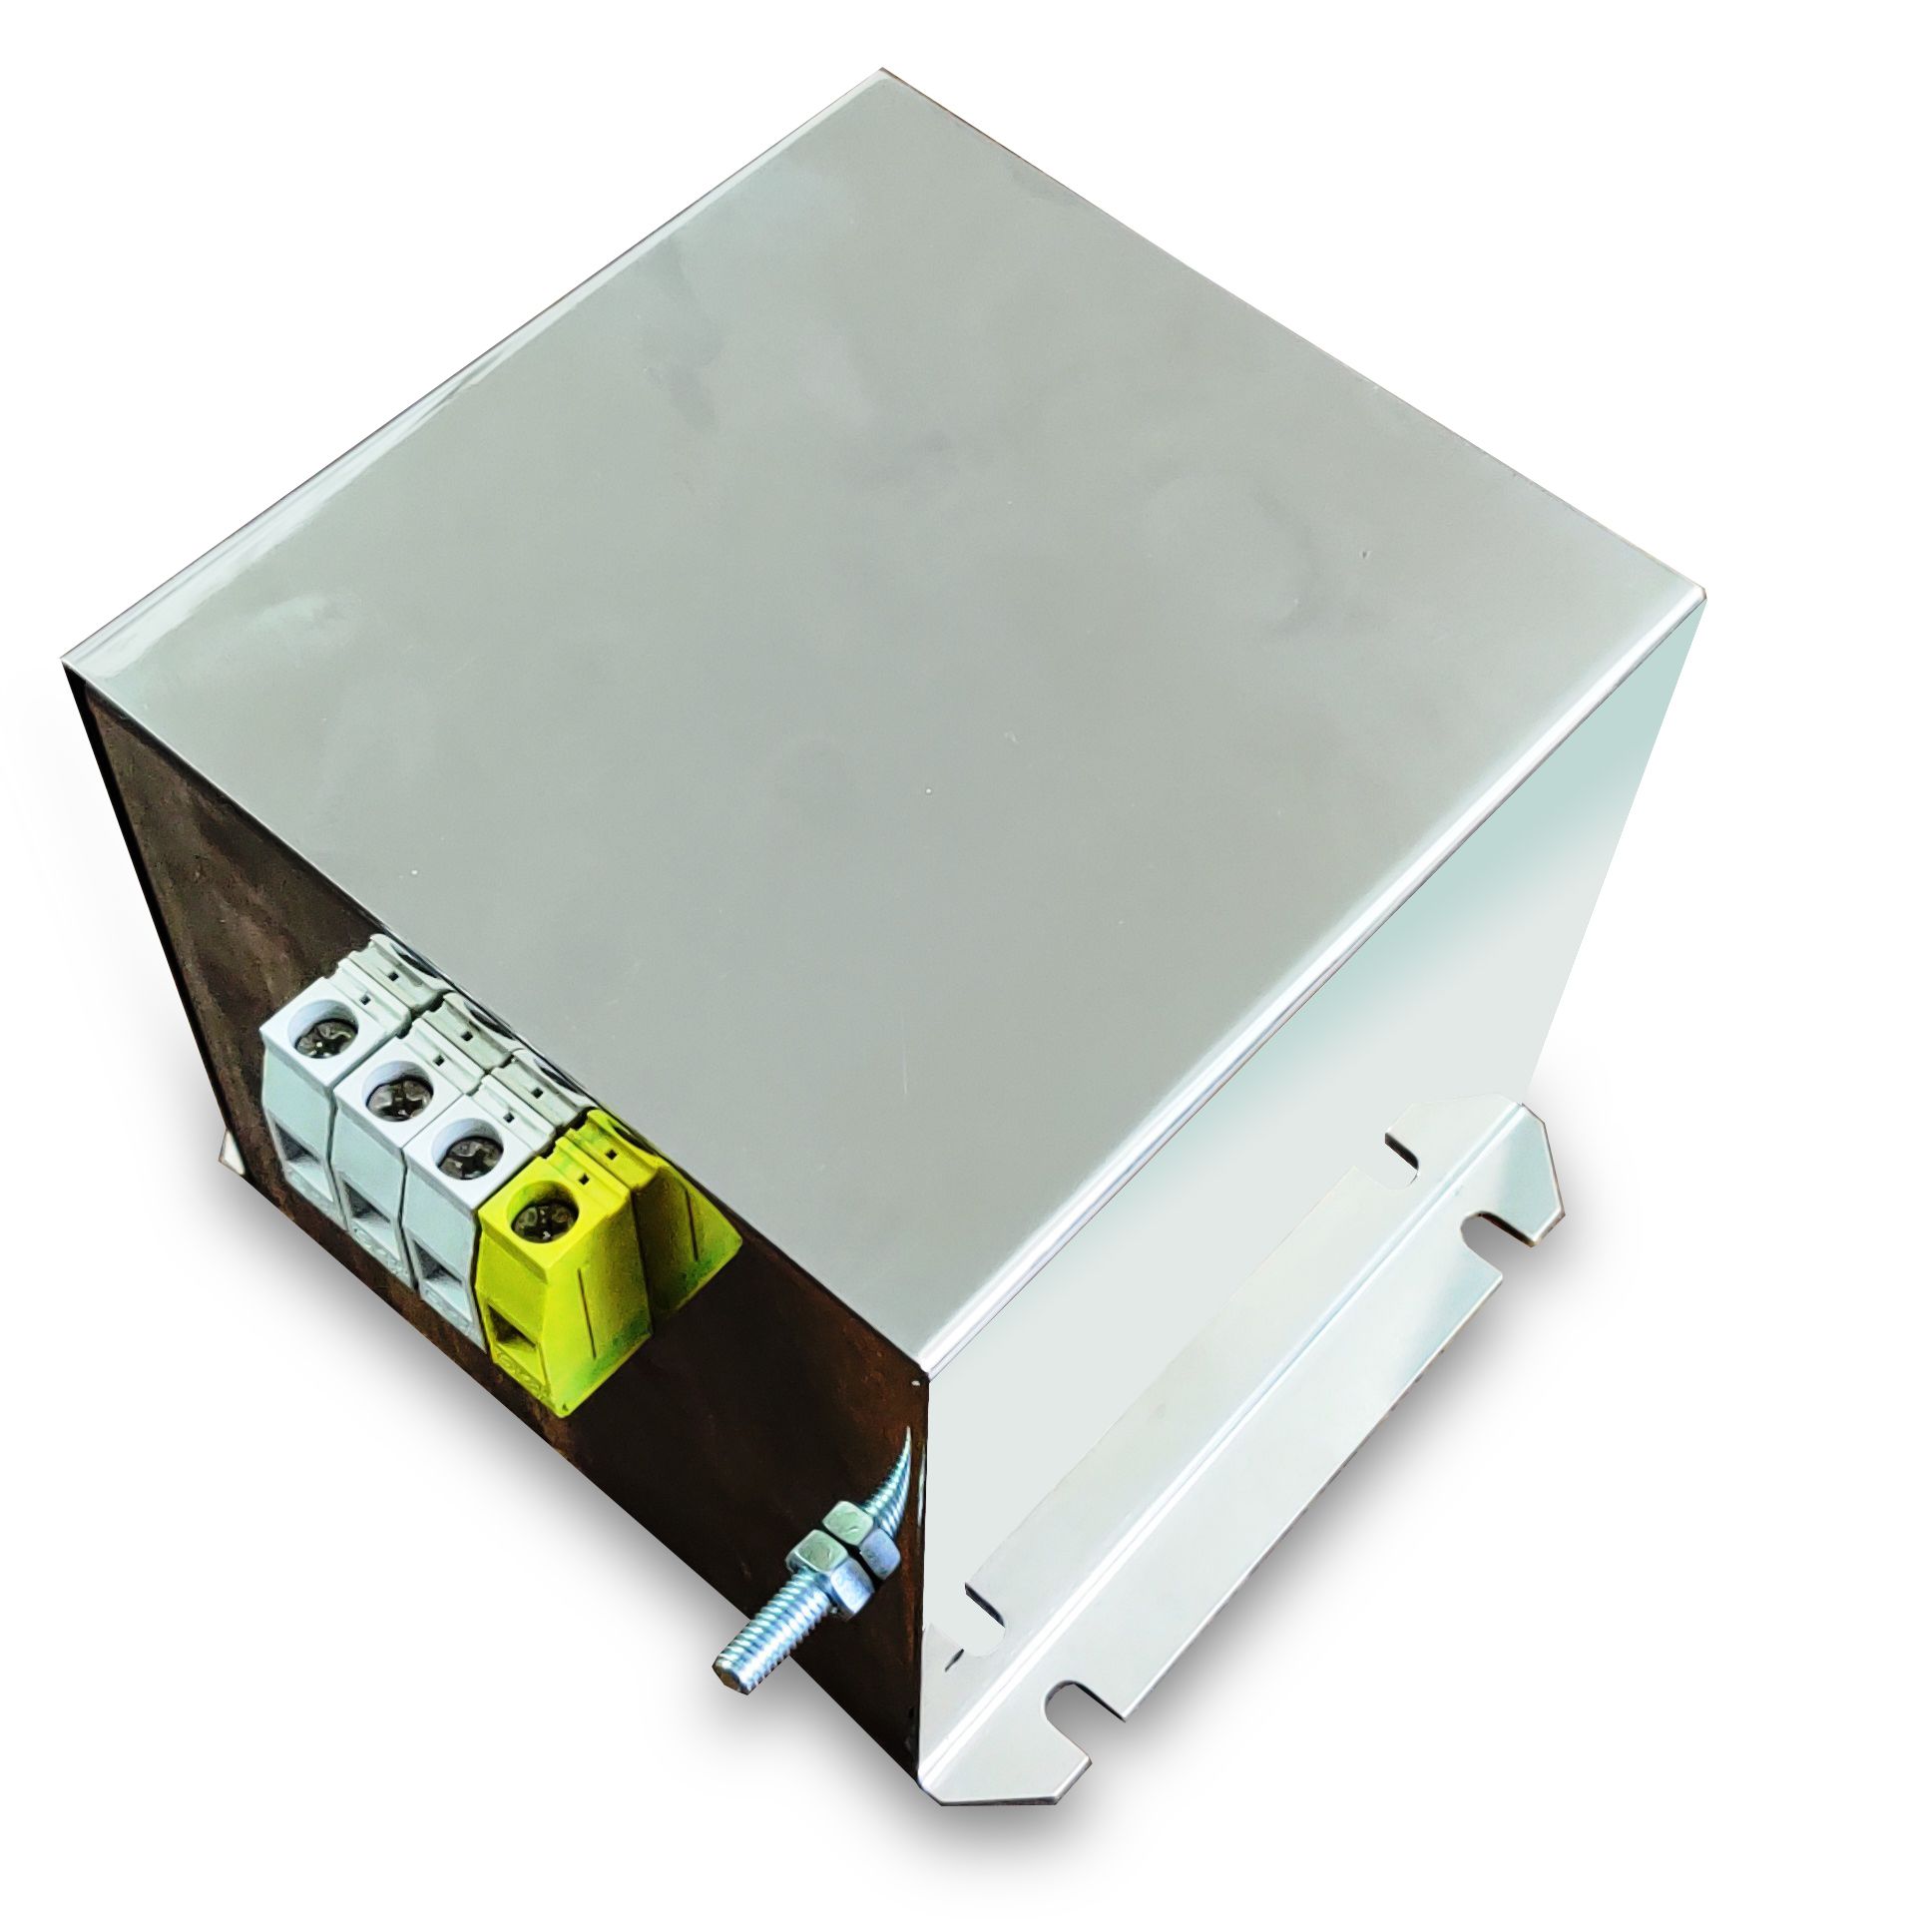 Filtro EMC United Automation, 64A, 520 V, 50-60Hz, Montaje en Panel, con terminales Bloque Terminal, Serie 328, 3 Fases